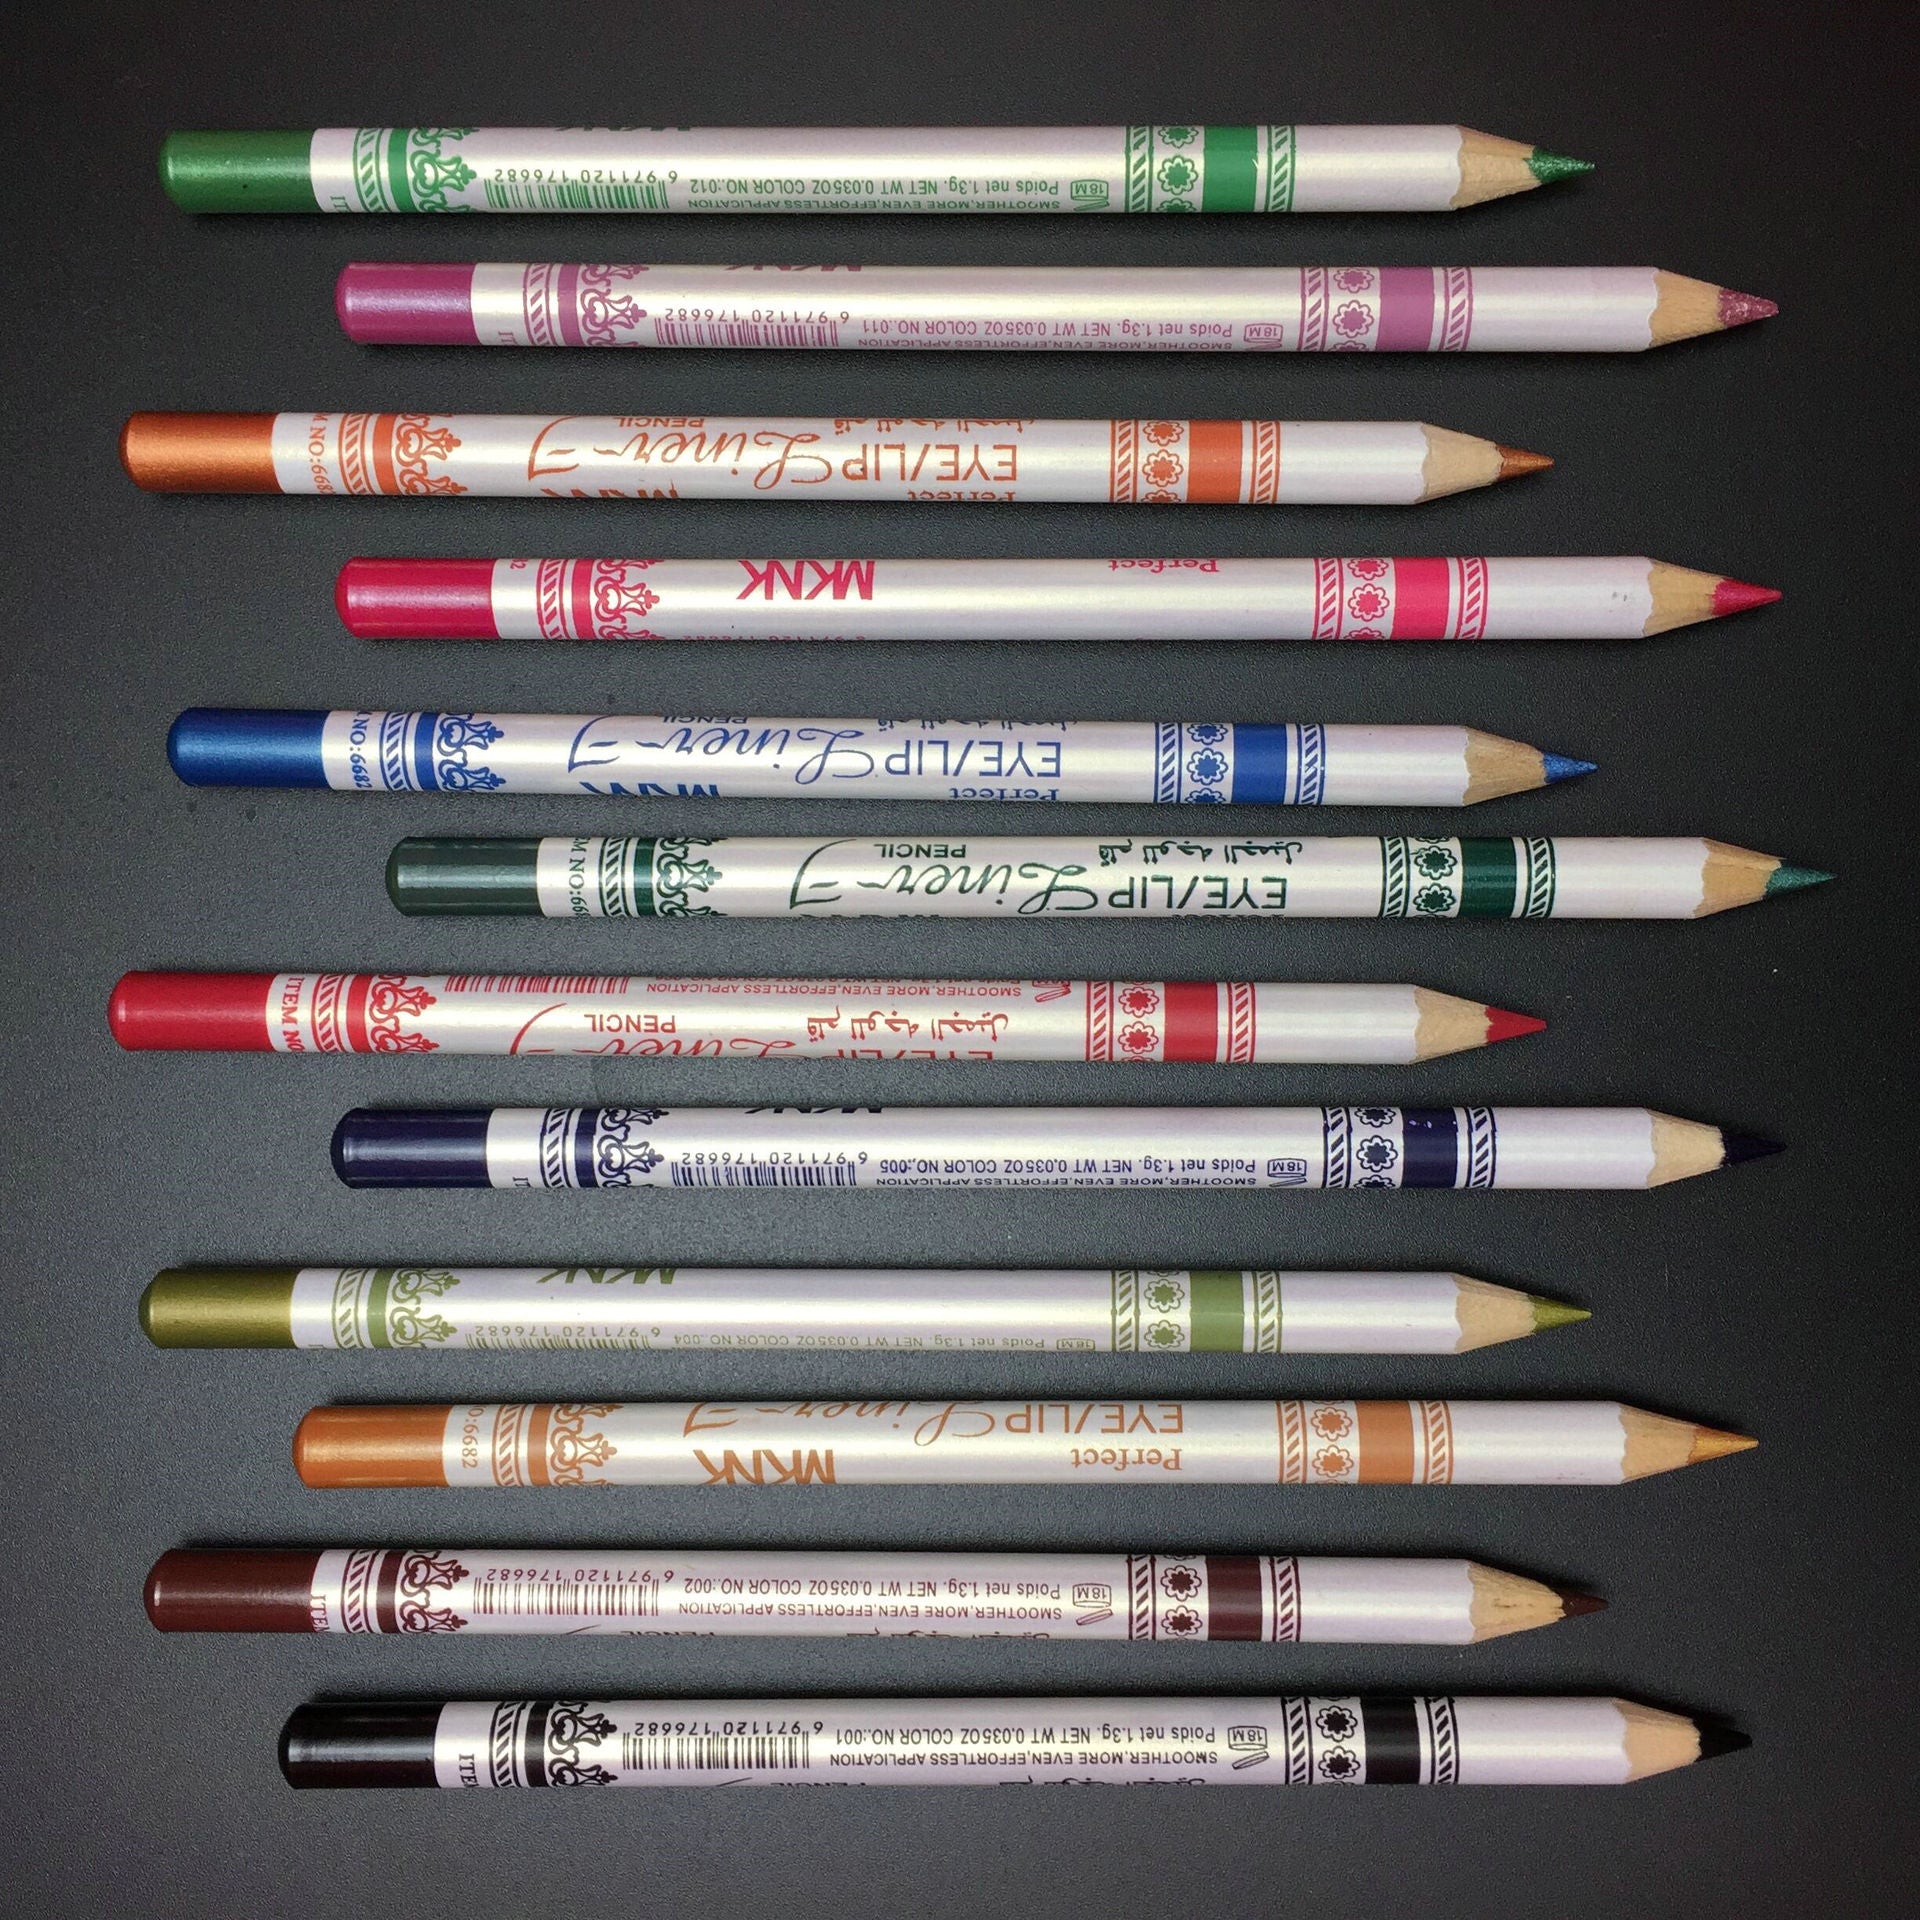 Cosmetics 12 Colors Glitter Lip liner Eye Shadow Eyeliner Pencil Pen Makeup